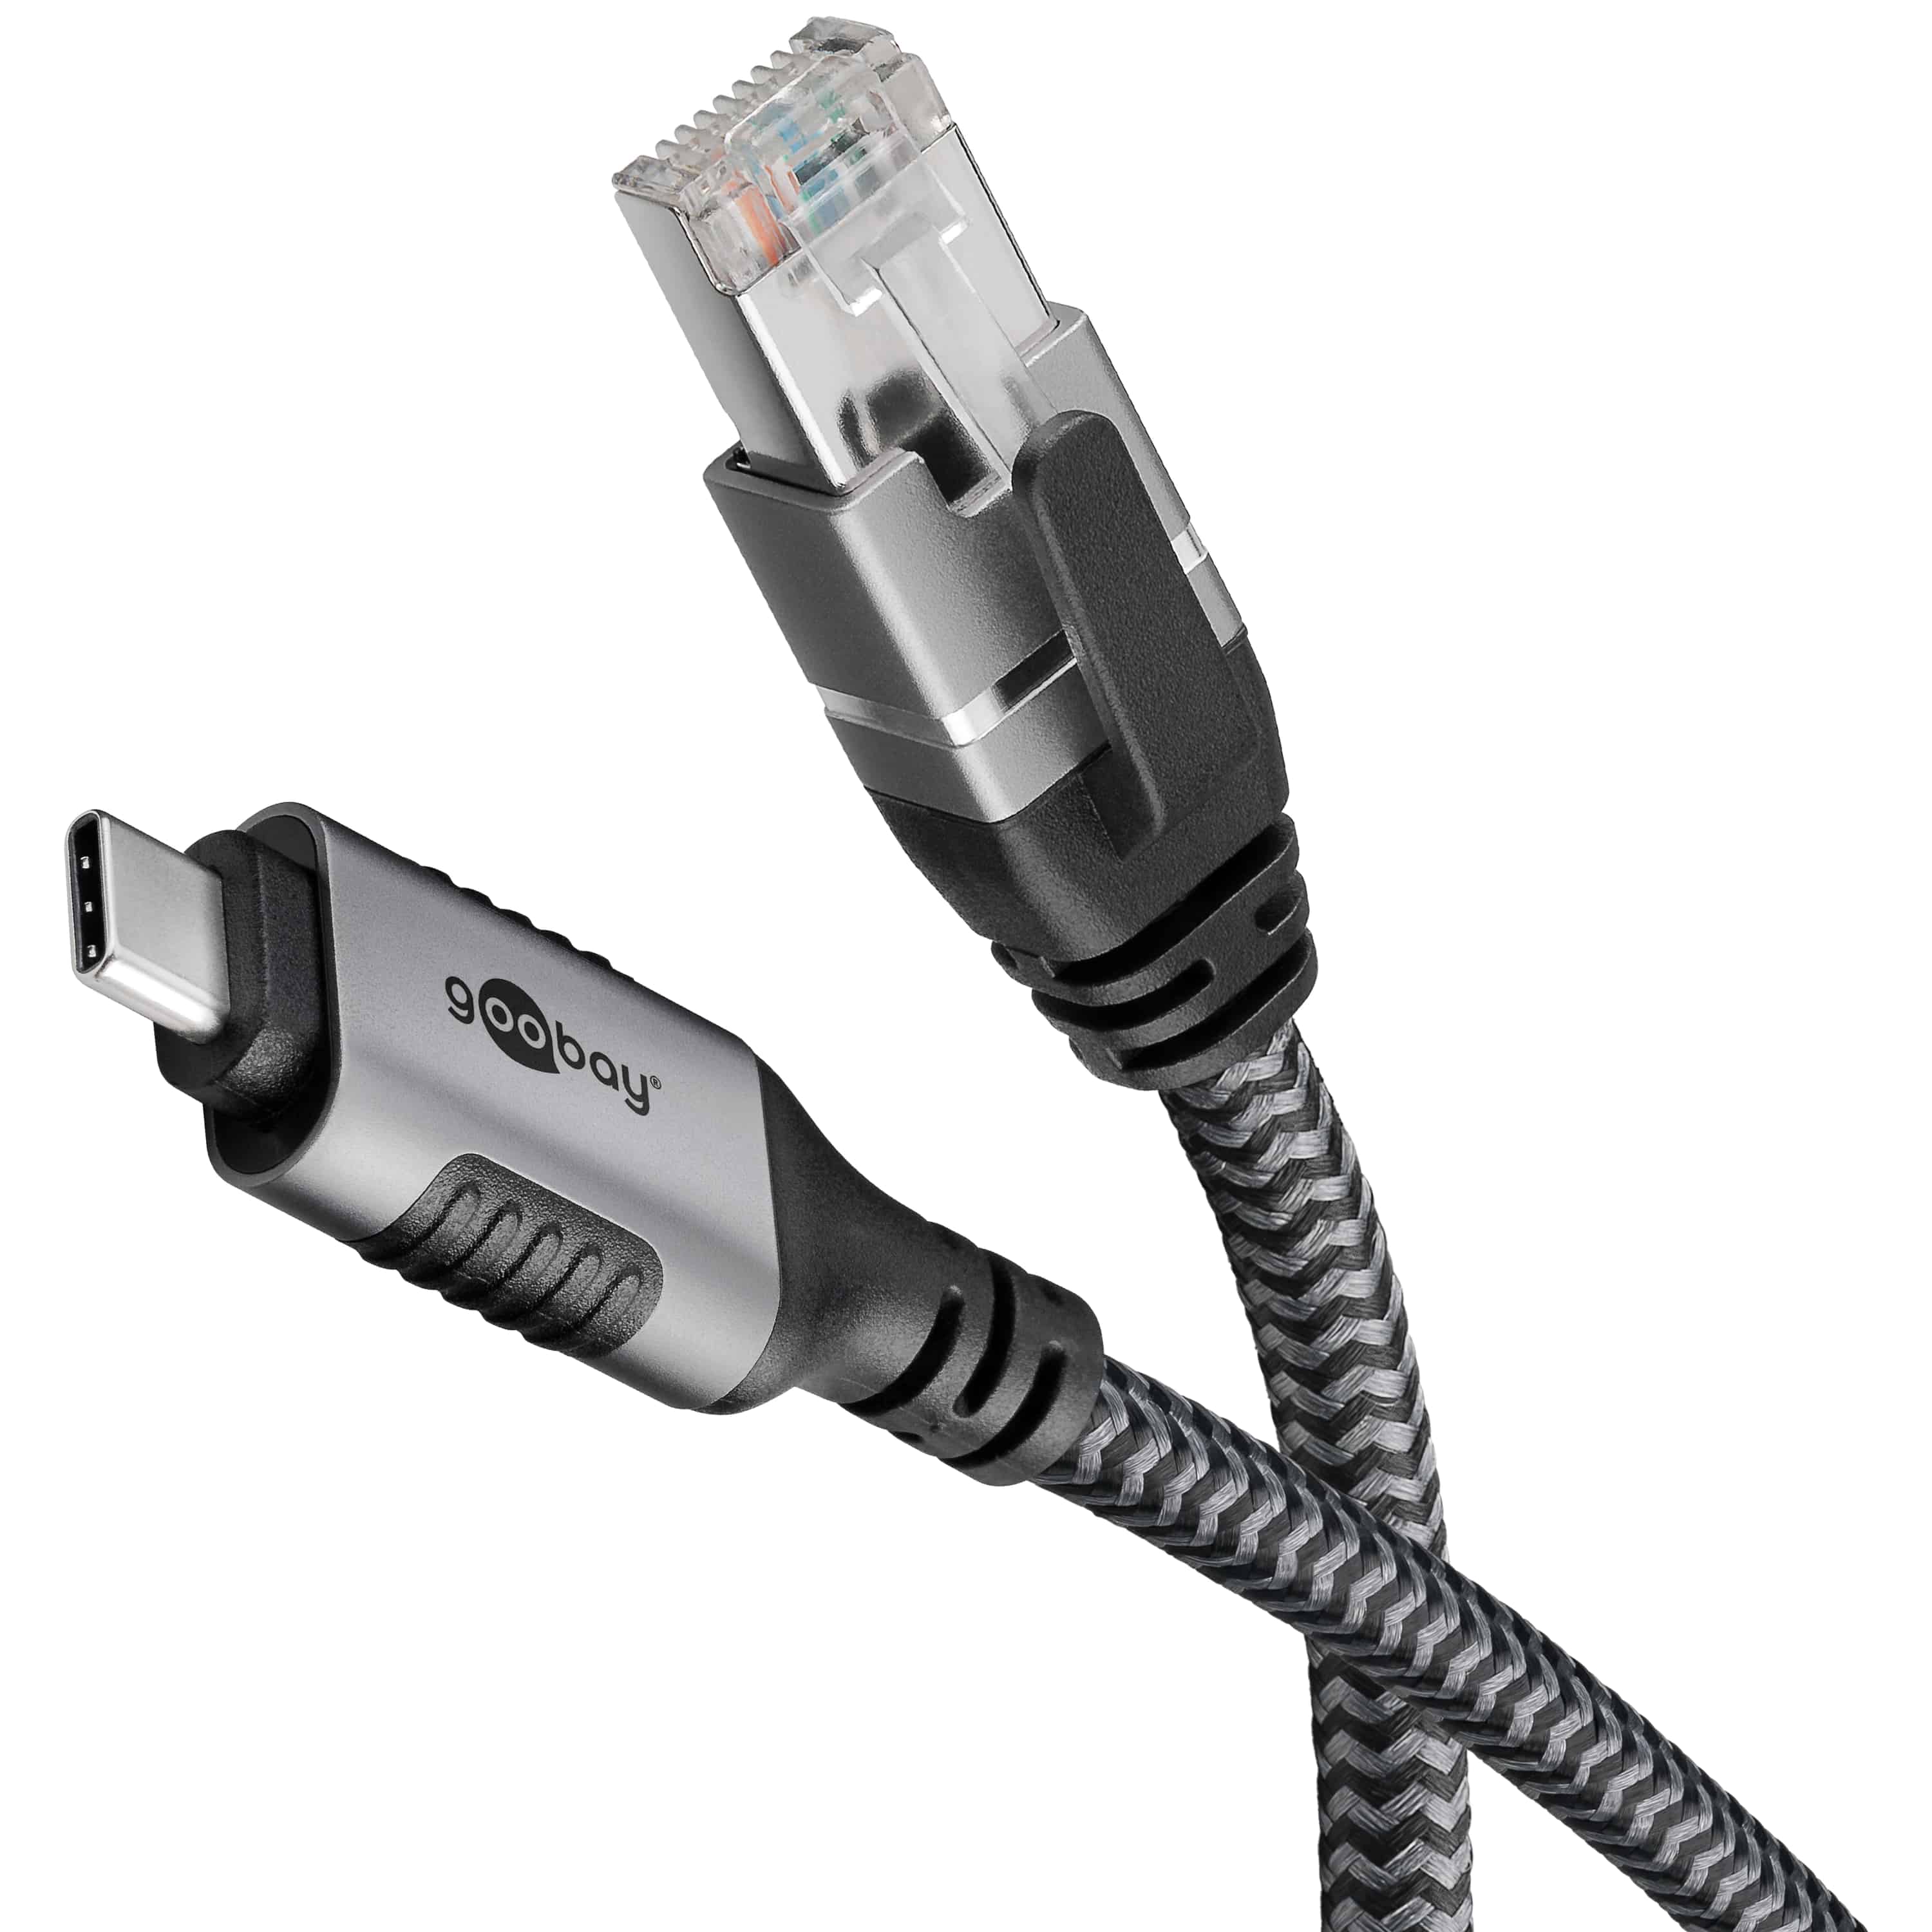 GOOBAY Ethernet-Kabel CAT6 USB-AC 3.1 auf RJ45 7,5m